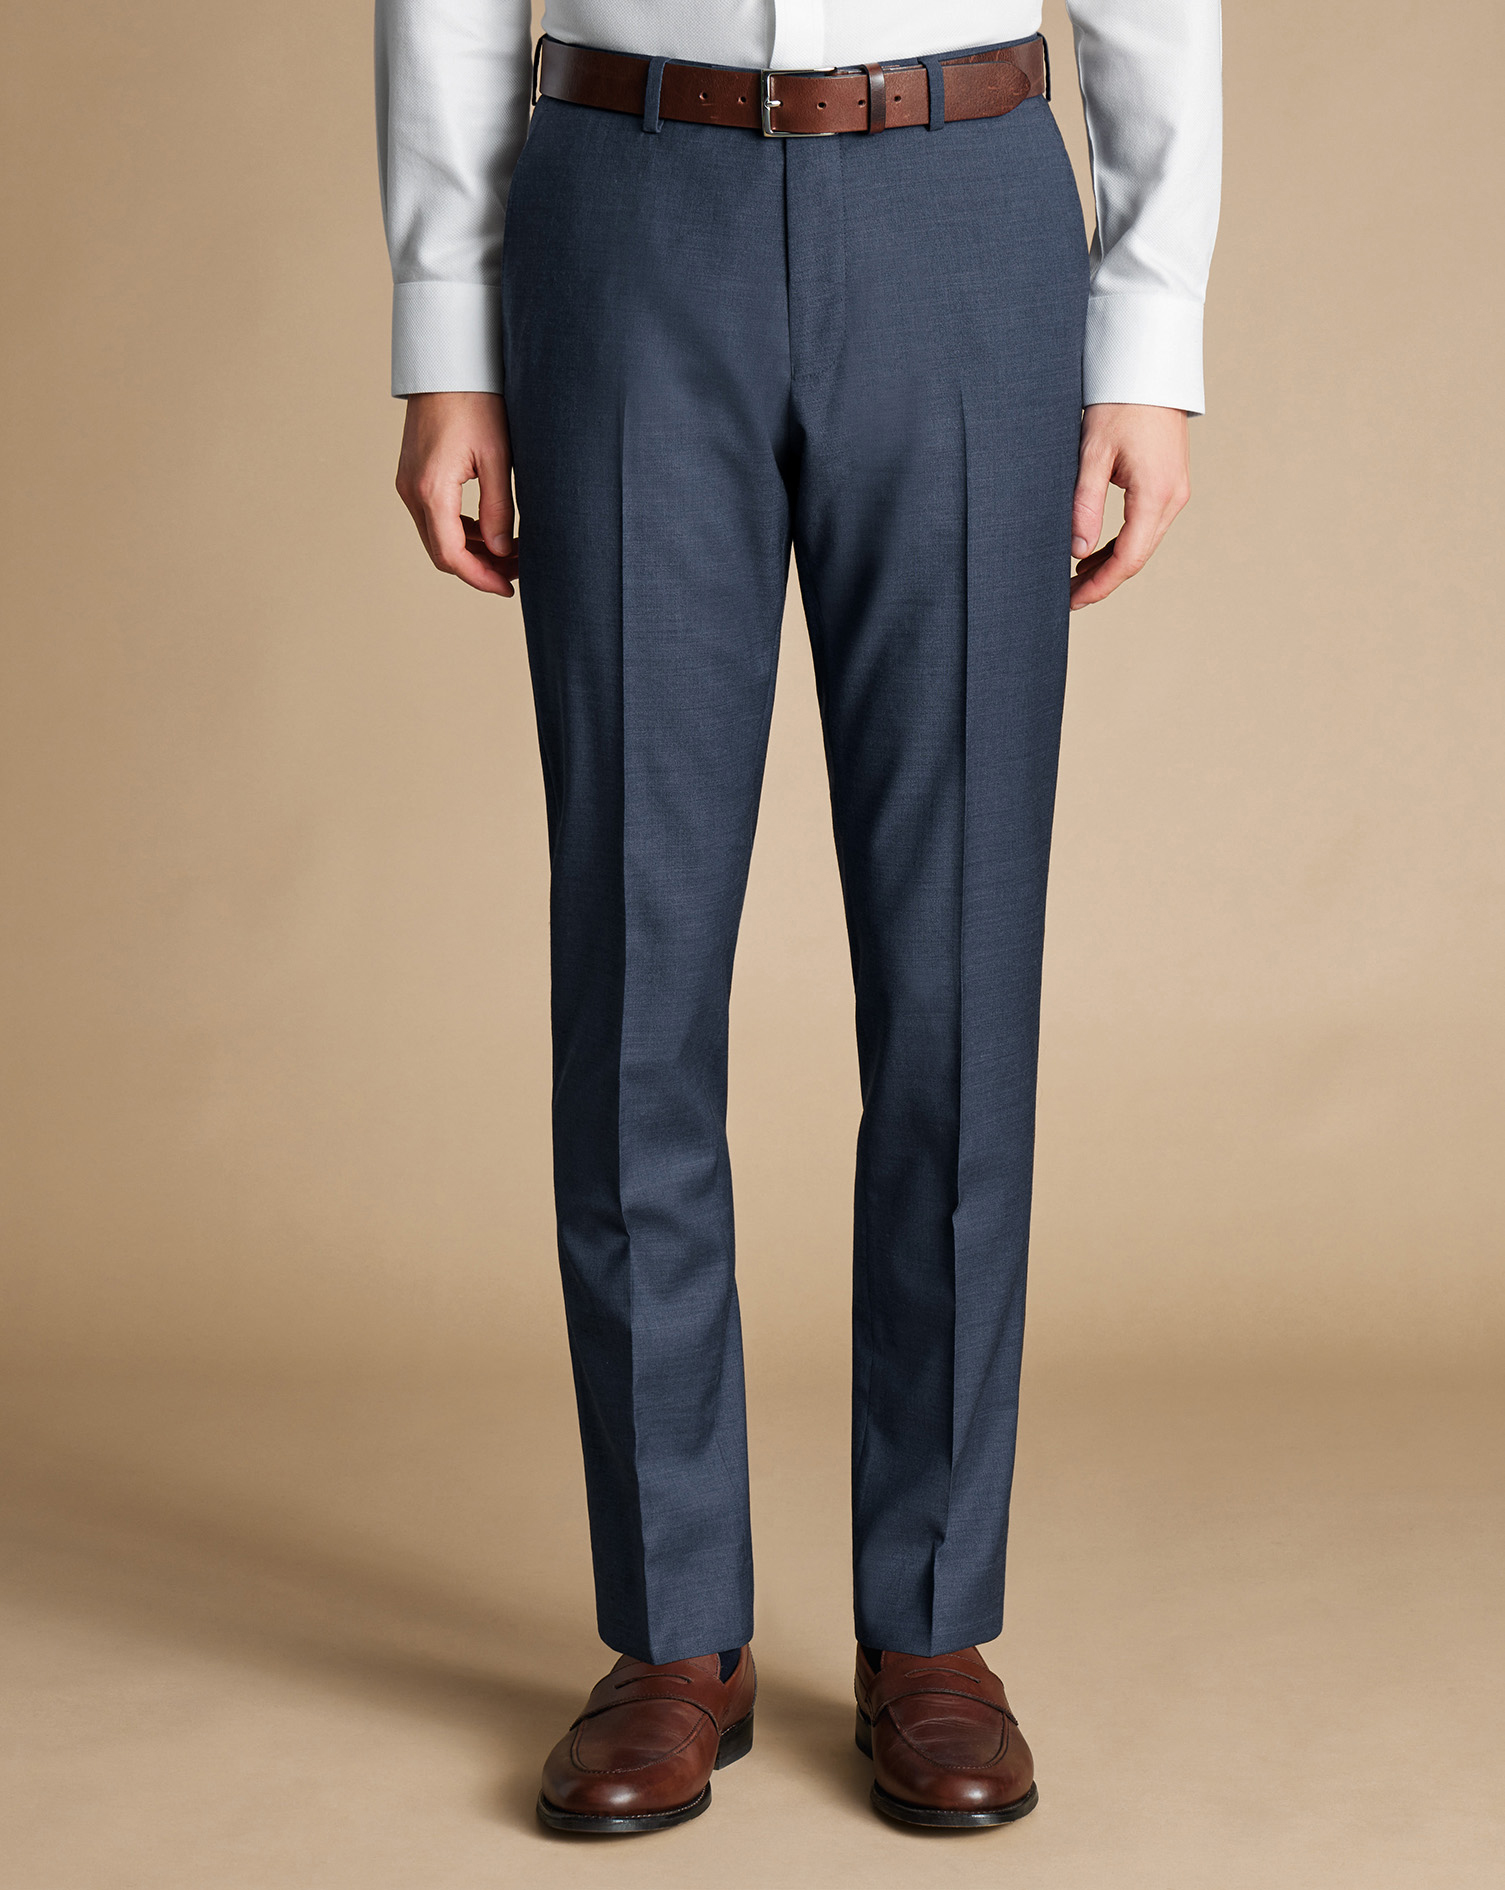 Men's Charles Tyrwhitt Italian Suit Trousers - Heather Blue Size 36/32
